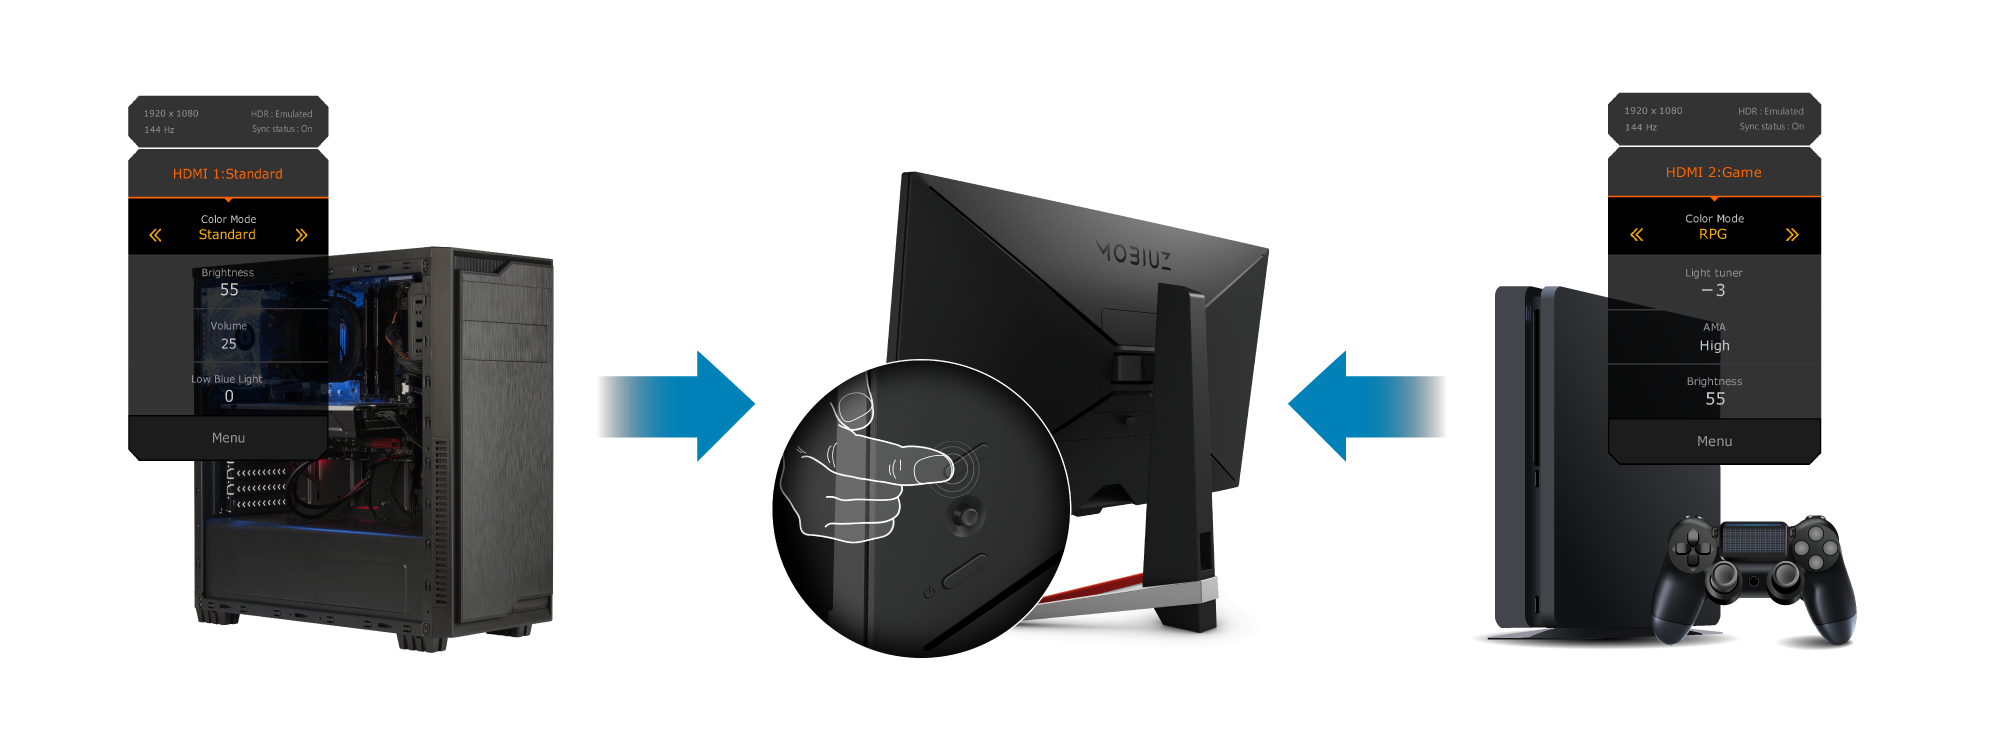 BenQ MOBIUZ Προρρυθμισμένες τιμές για ισοσταθμιστή μαύρου, ένταση ήχου και φωτεινότητα, για τα διαφορετικά σας σενάρια. Επιλέξτε με ευκολία τις δικές σας ρυθμίσεις OSD.Σύστημα πλοήγησης 5 κινήσεων Εύκολη πρόσβαση στις πιο δημοφιλείς σας ρυθμίσεις. Ένα joystick στο πίσω μέρος σου επιτρέπει να προσαρμόζεις τις ρυθμίσεις με μια κίνηση του δακτύλου.